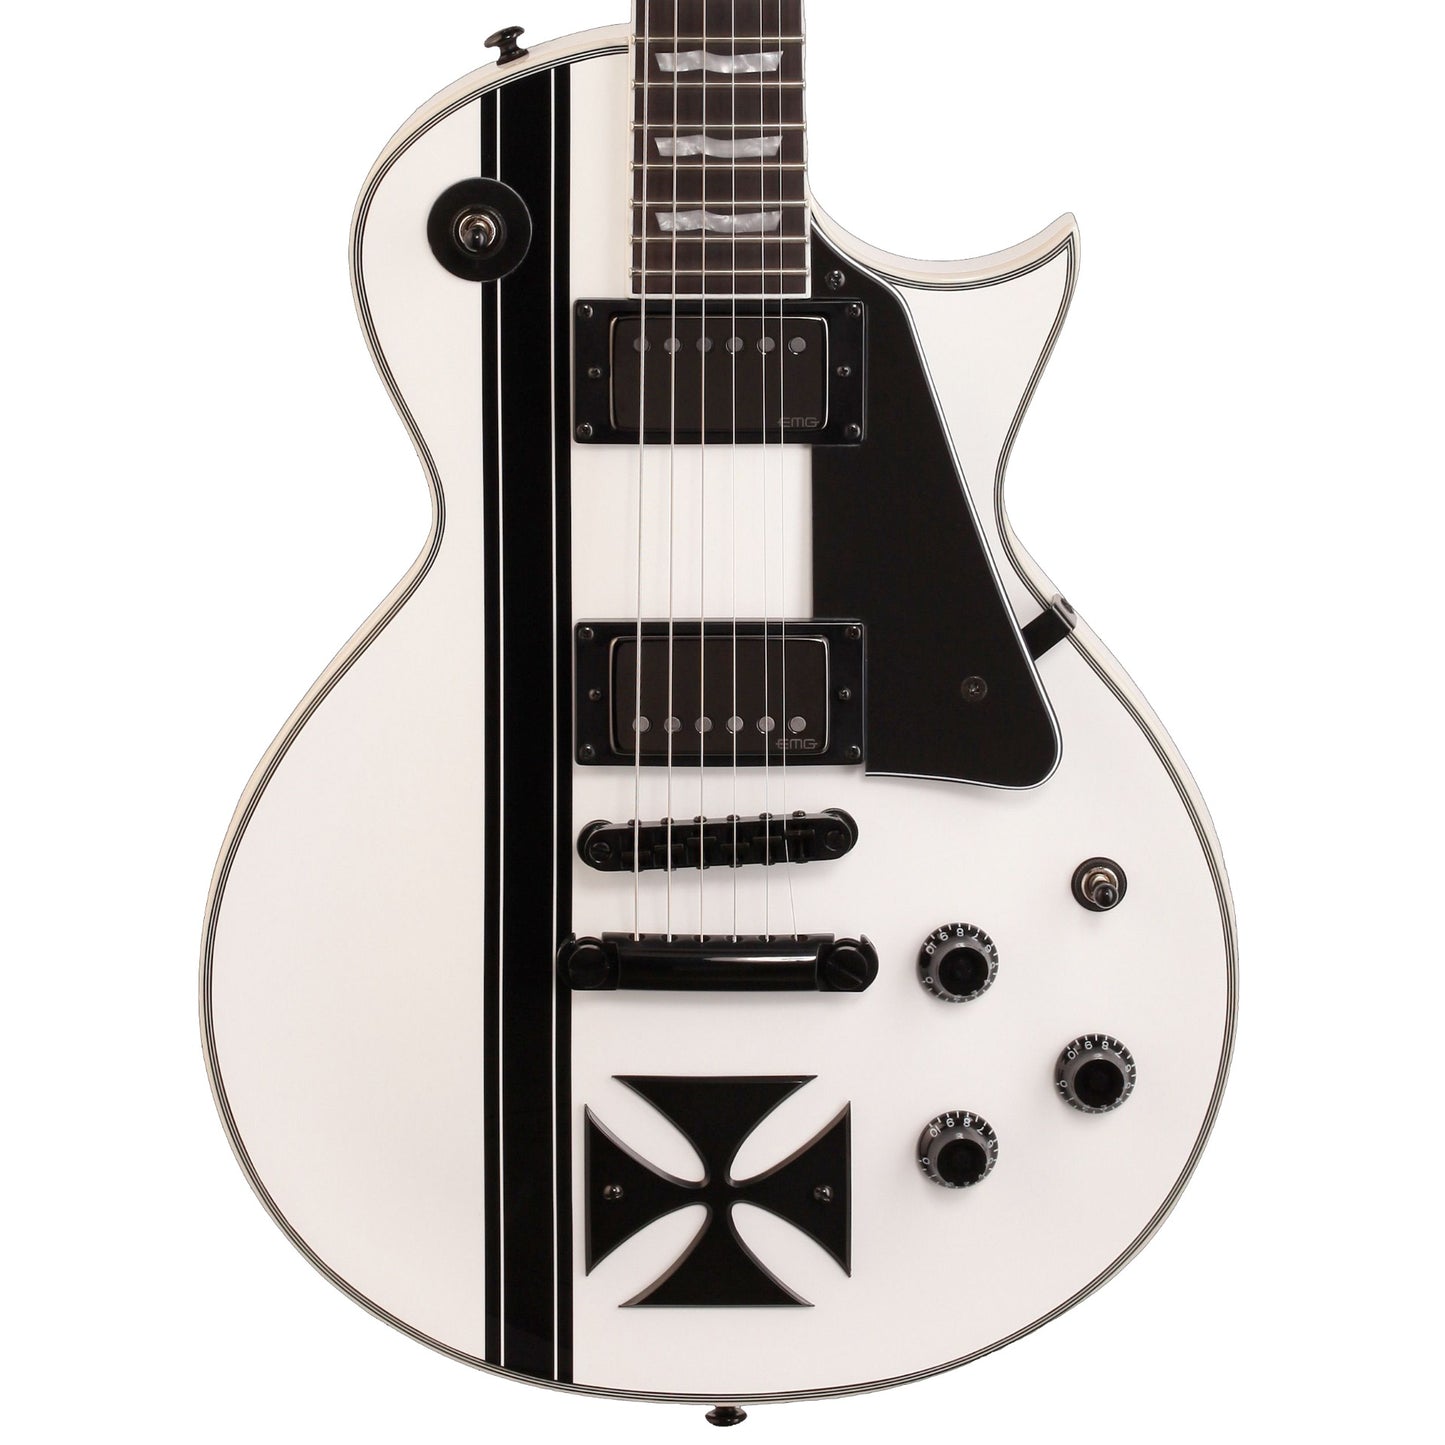 ESP LTD Iron Cross James Hetfield Signature Electric Guitar - Snow White